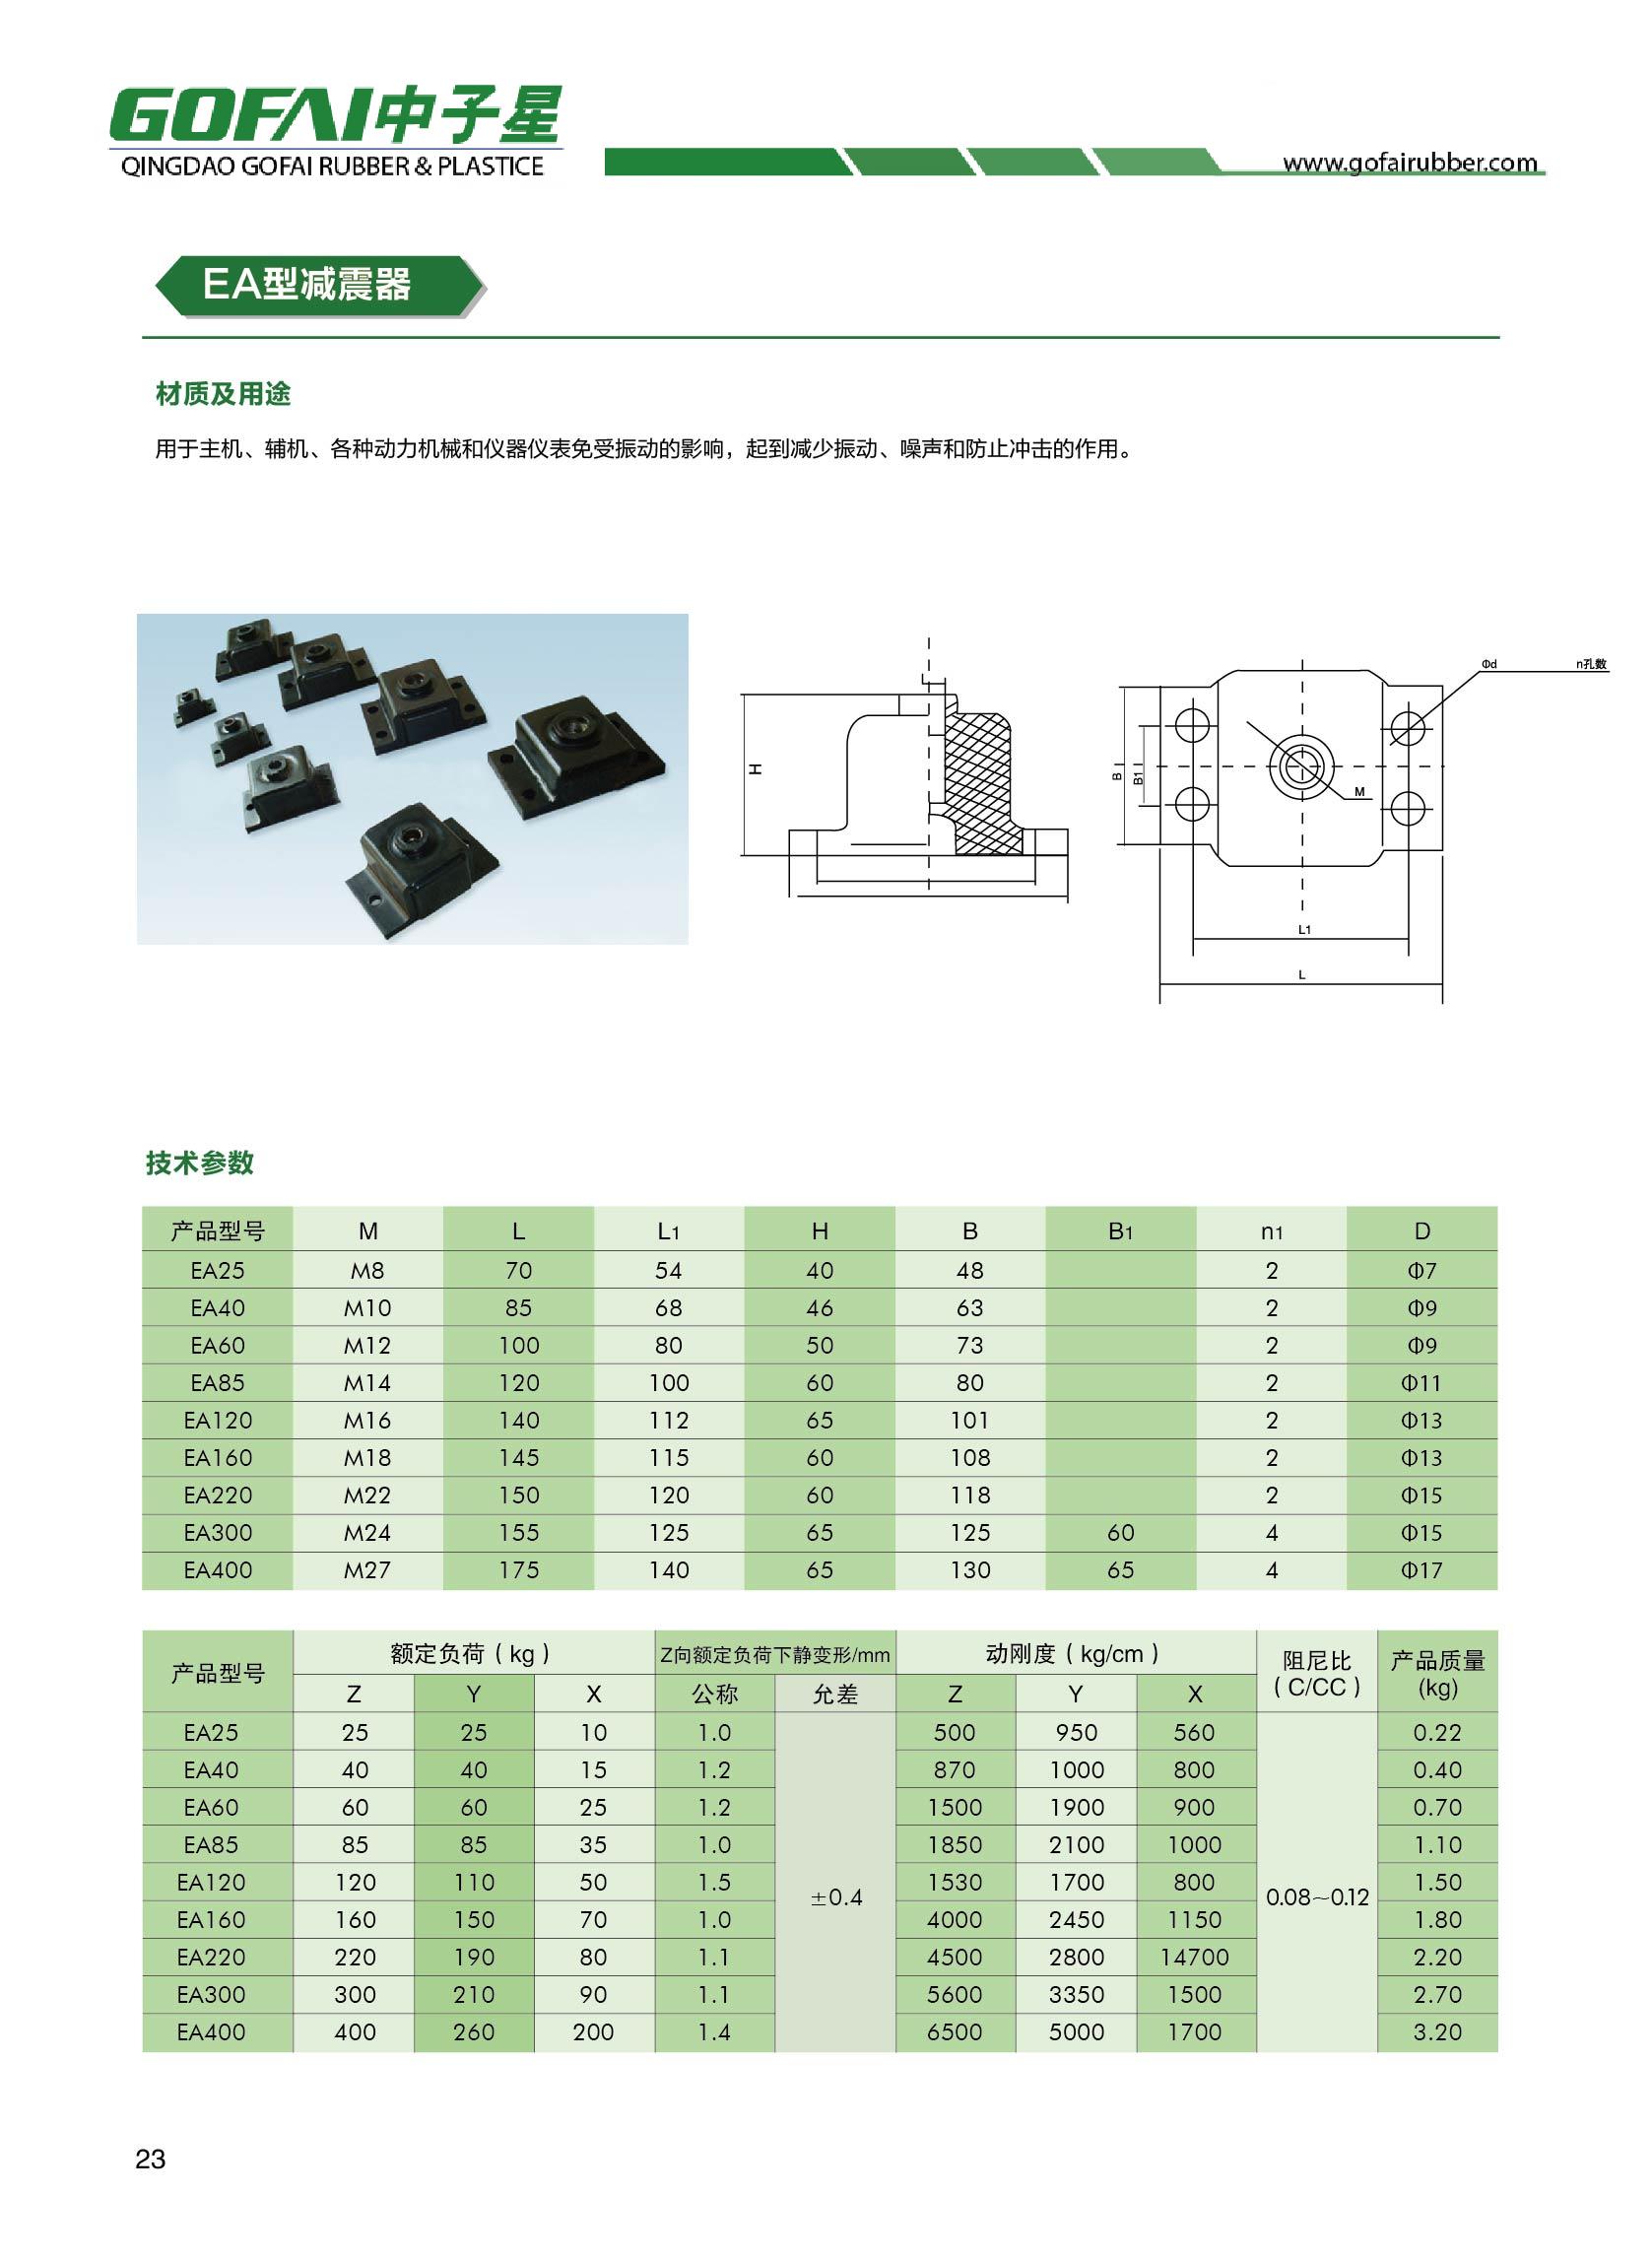 GOFAI catalog for rubber anti-vibration mounts_21.jpg